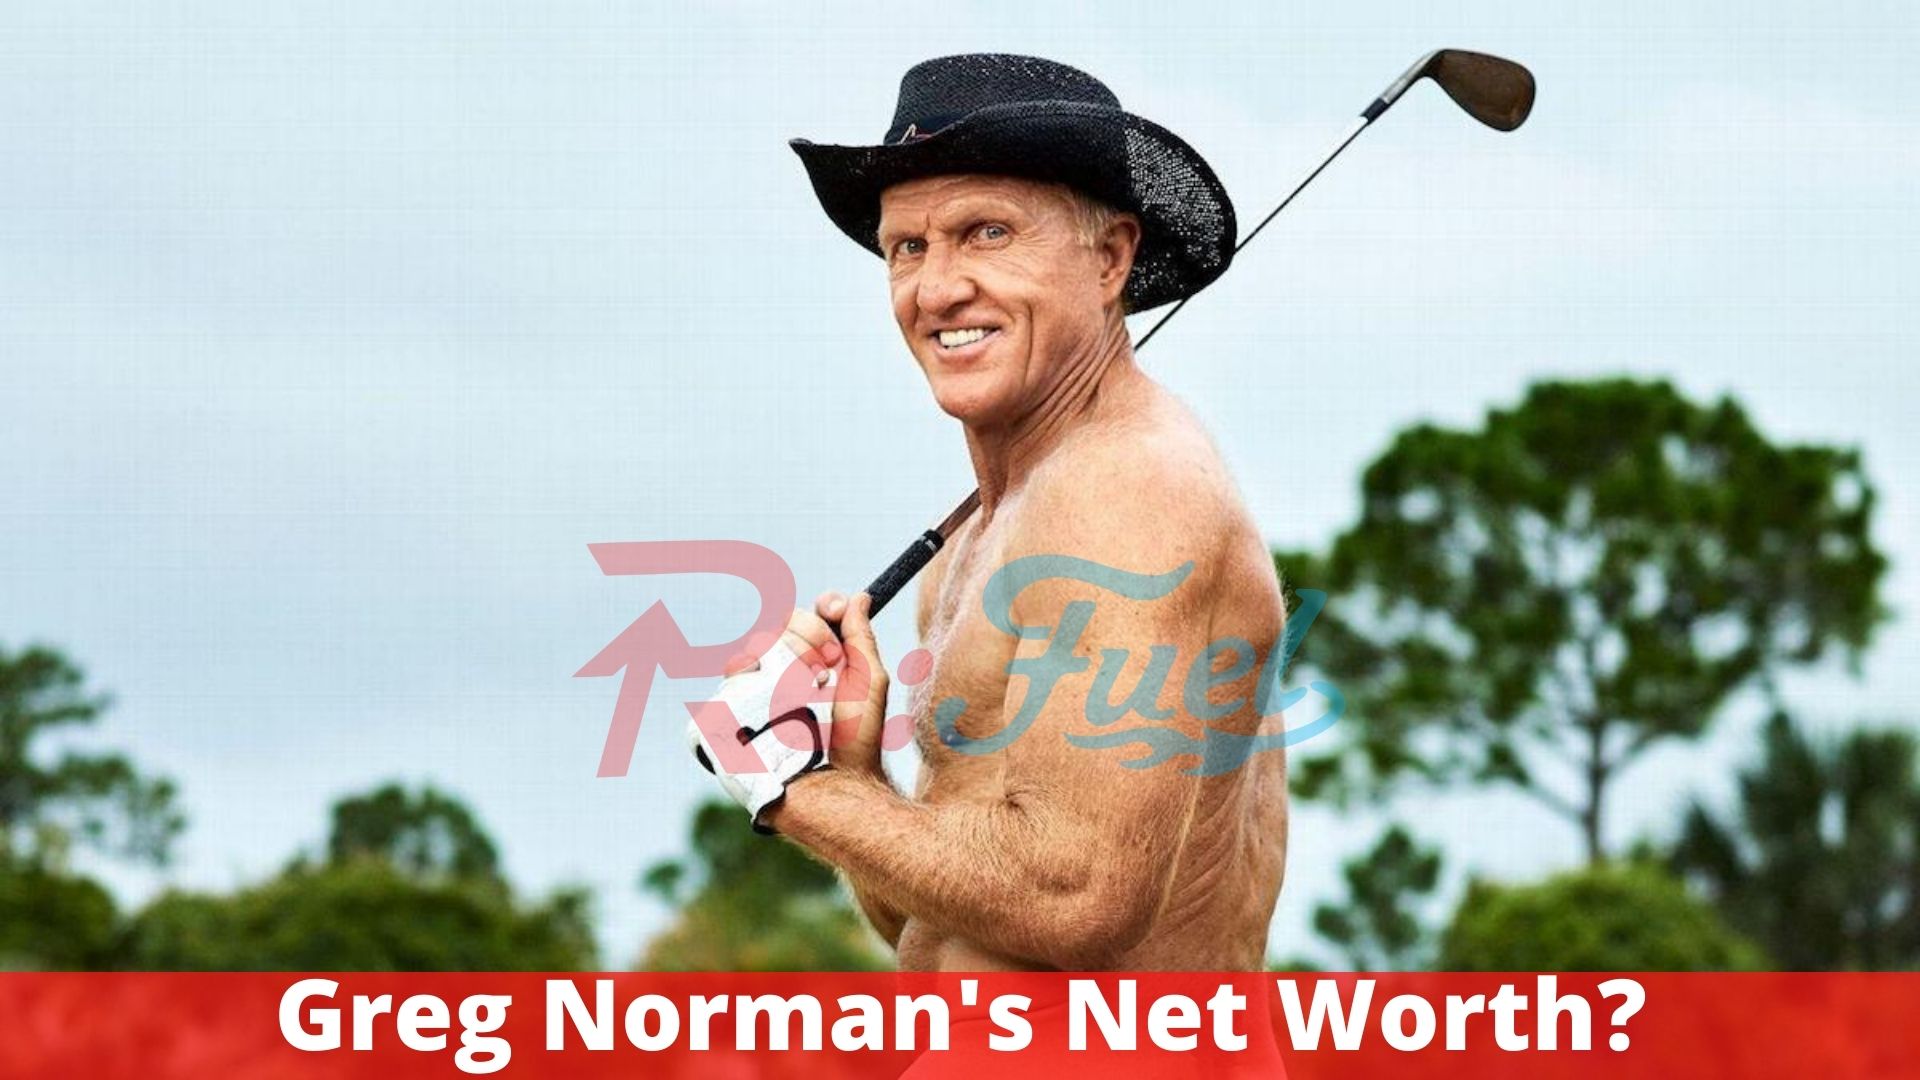 Greg Norman's Net Worth?